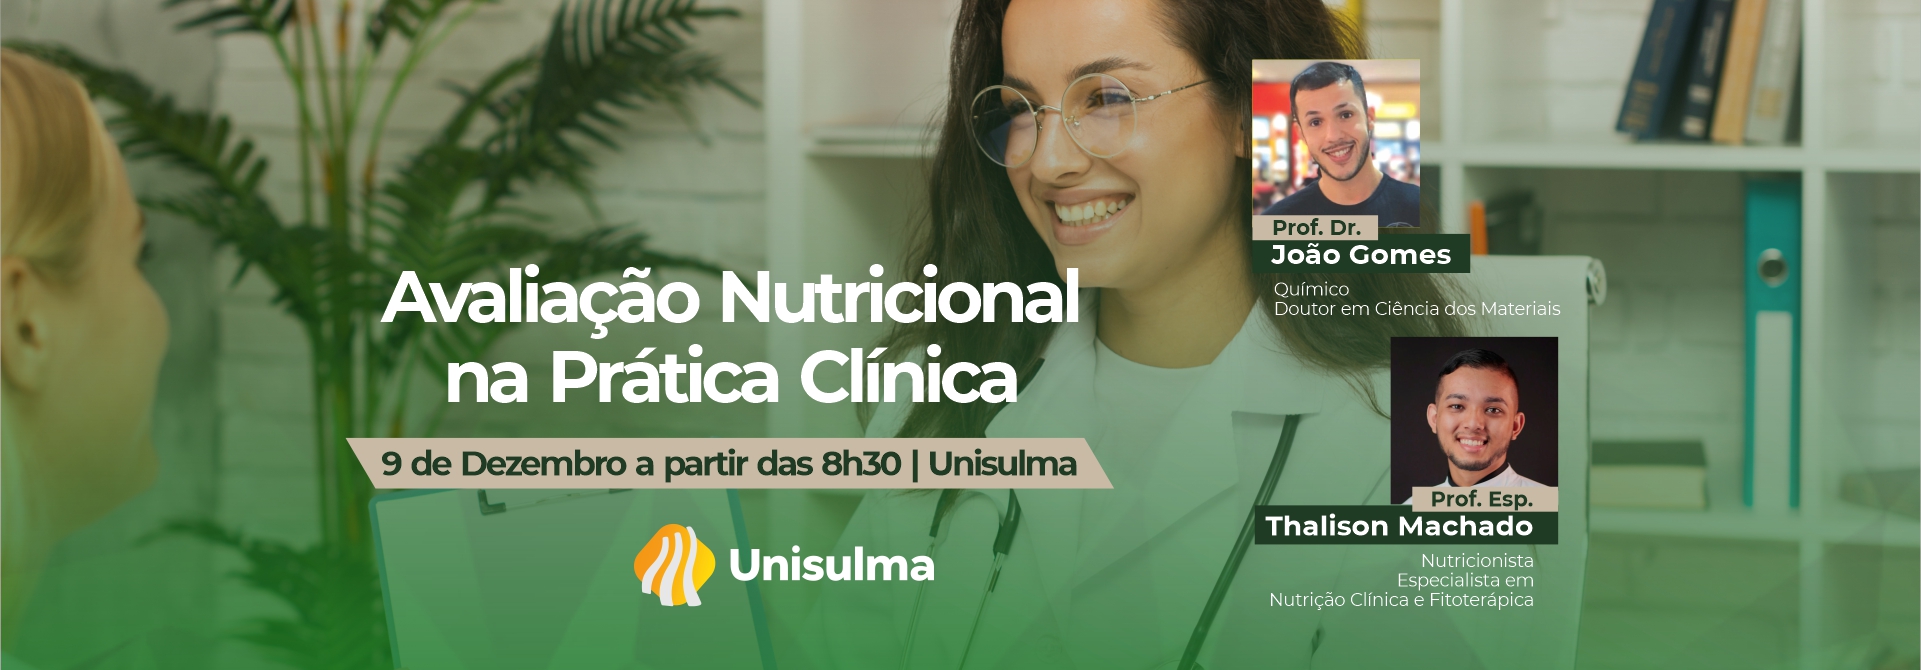 Avaliação Nutricional na Prática Clínica. banner site